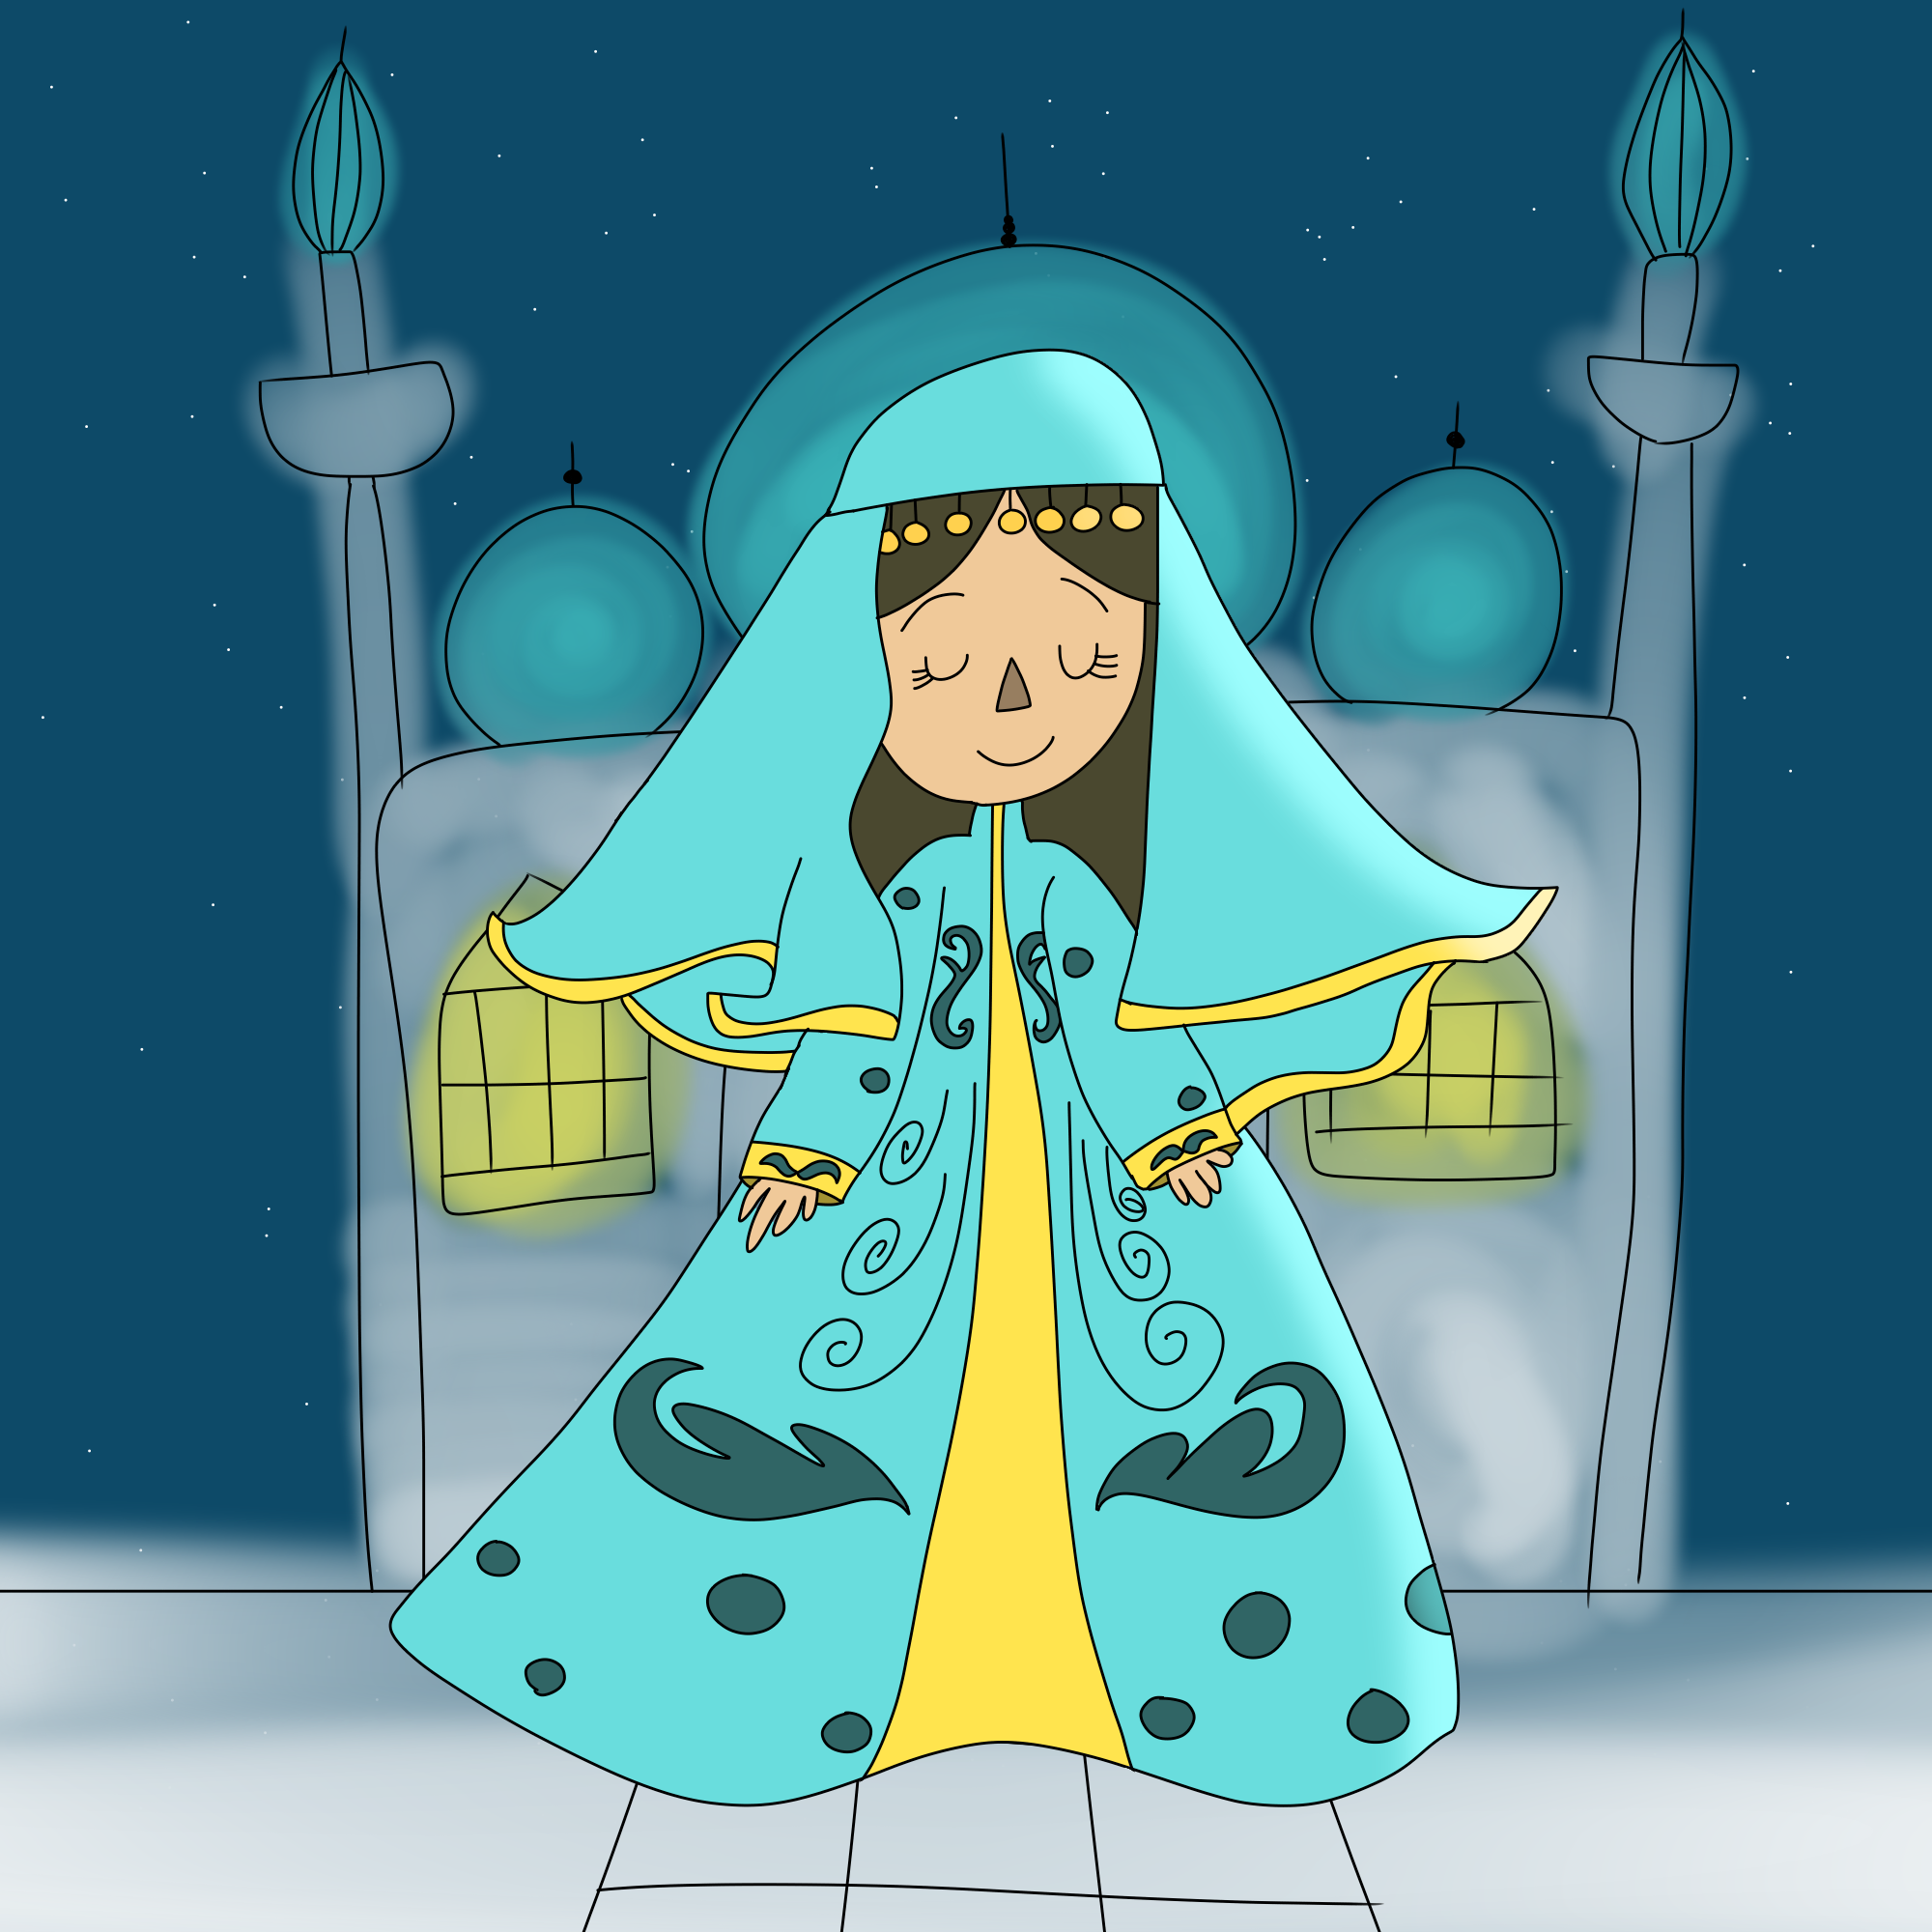 Princess of Persia